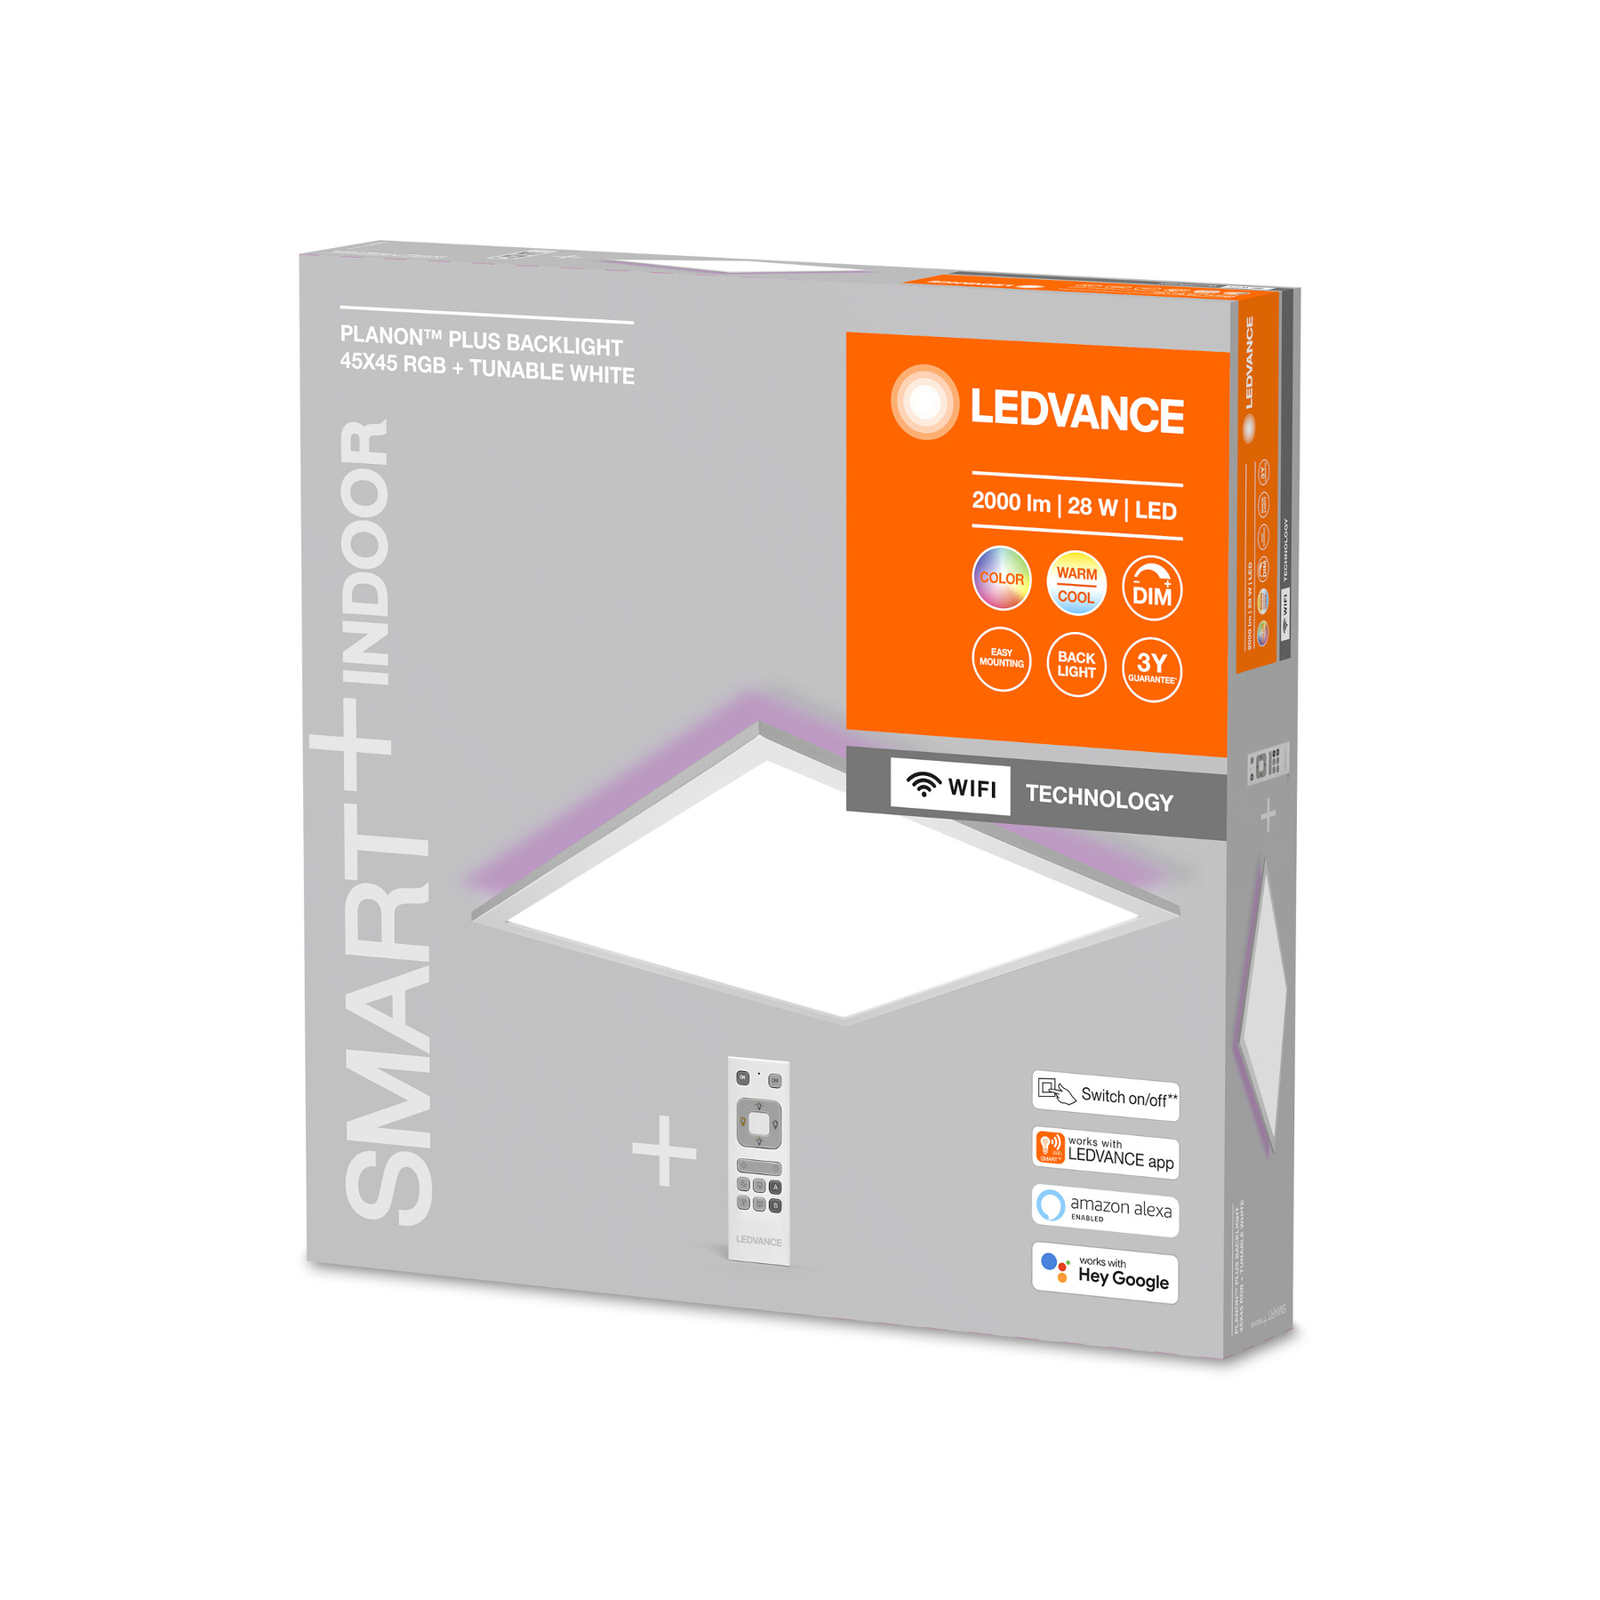 LEDVANCE SMART+ WiFi Planon Plus 45x45cm blanco